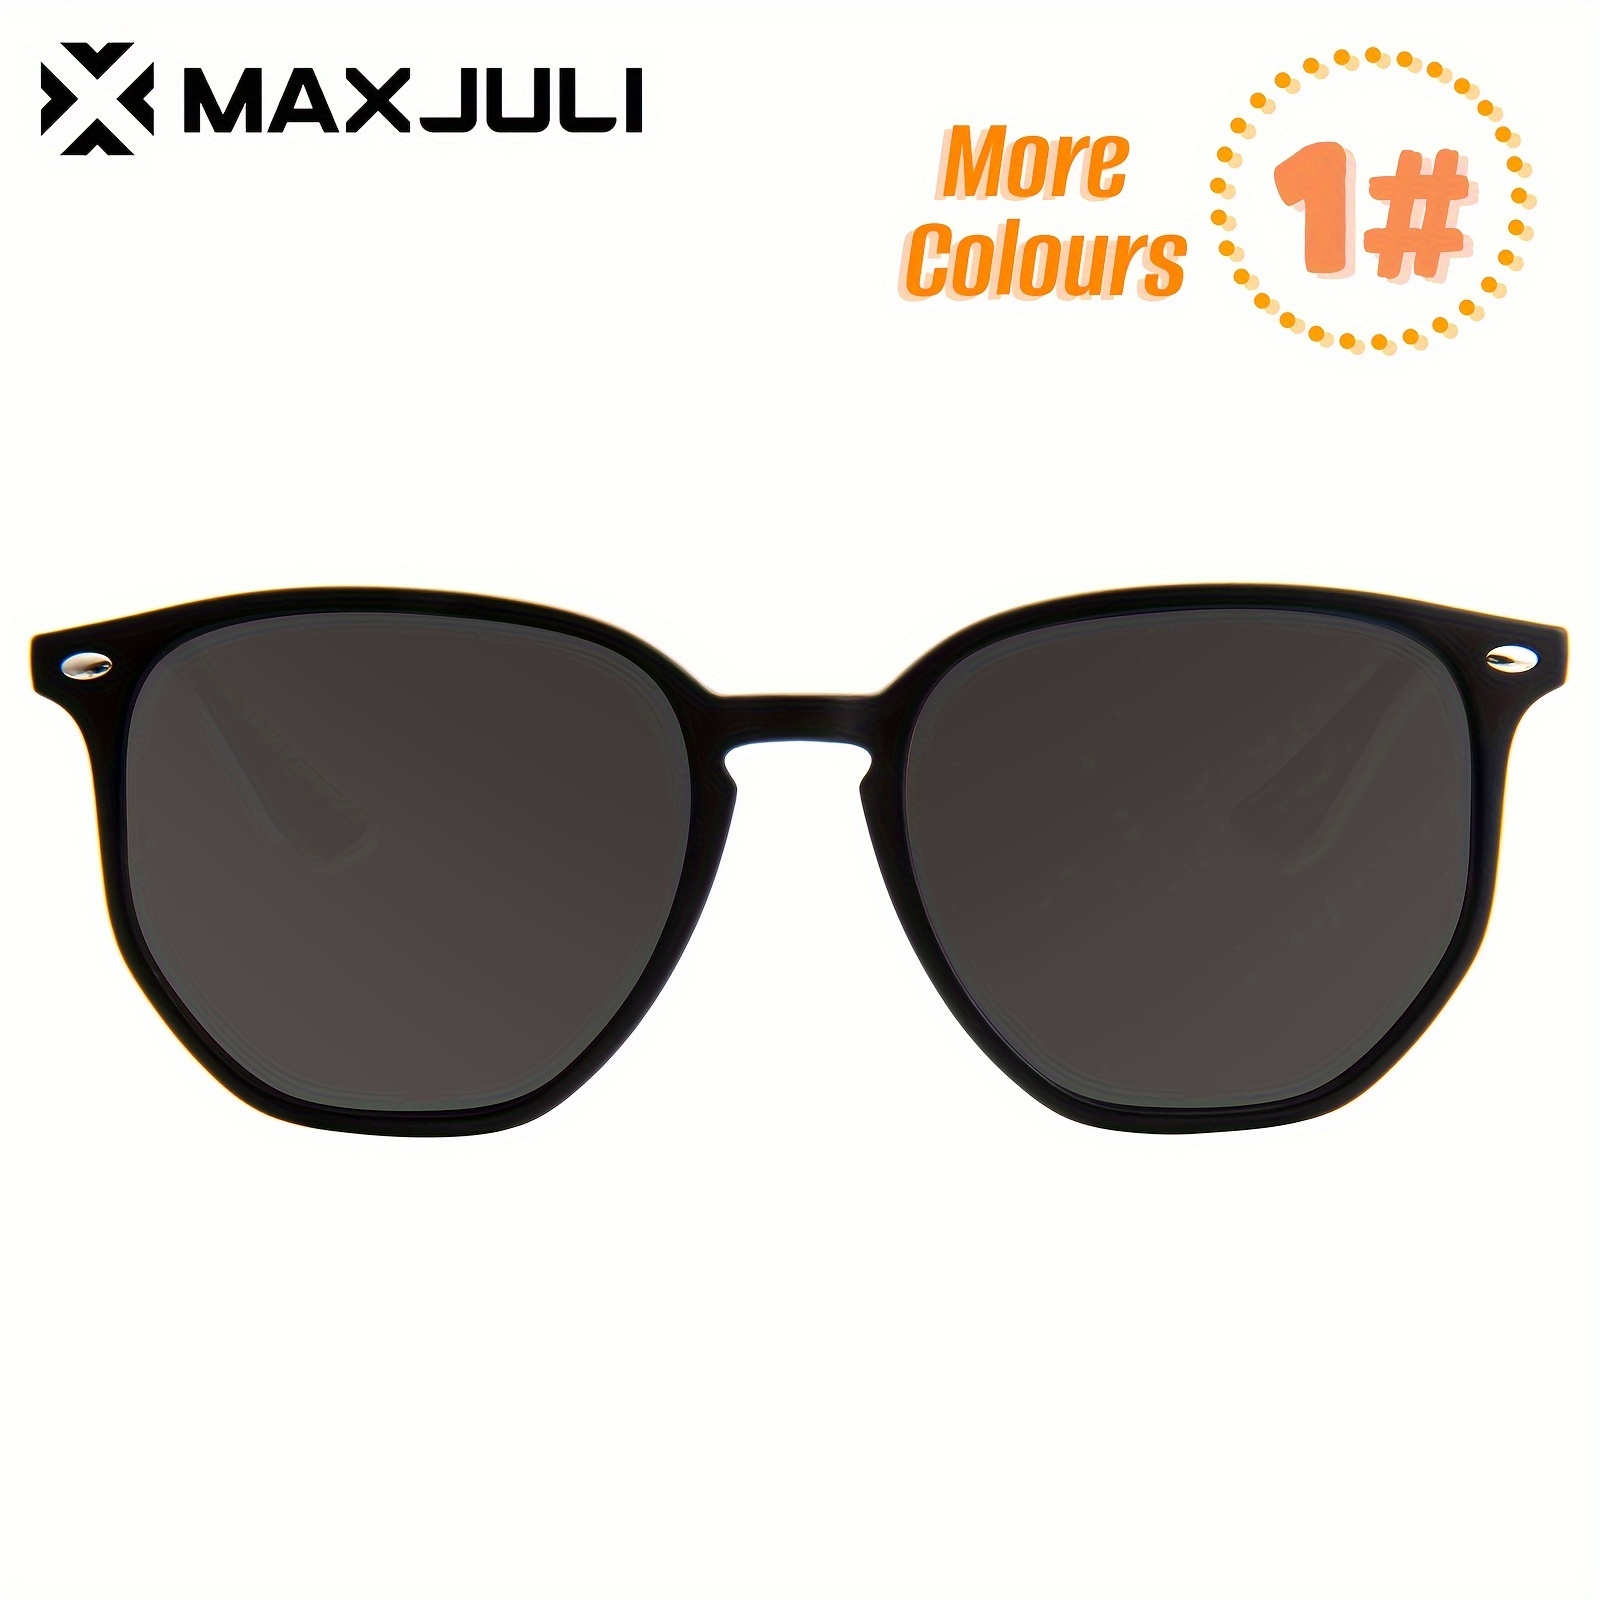 MAXJULI Polarized Round Sunglasses for Women Men with Big Heads